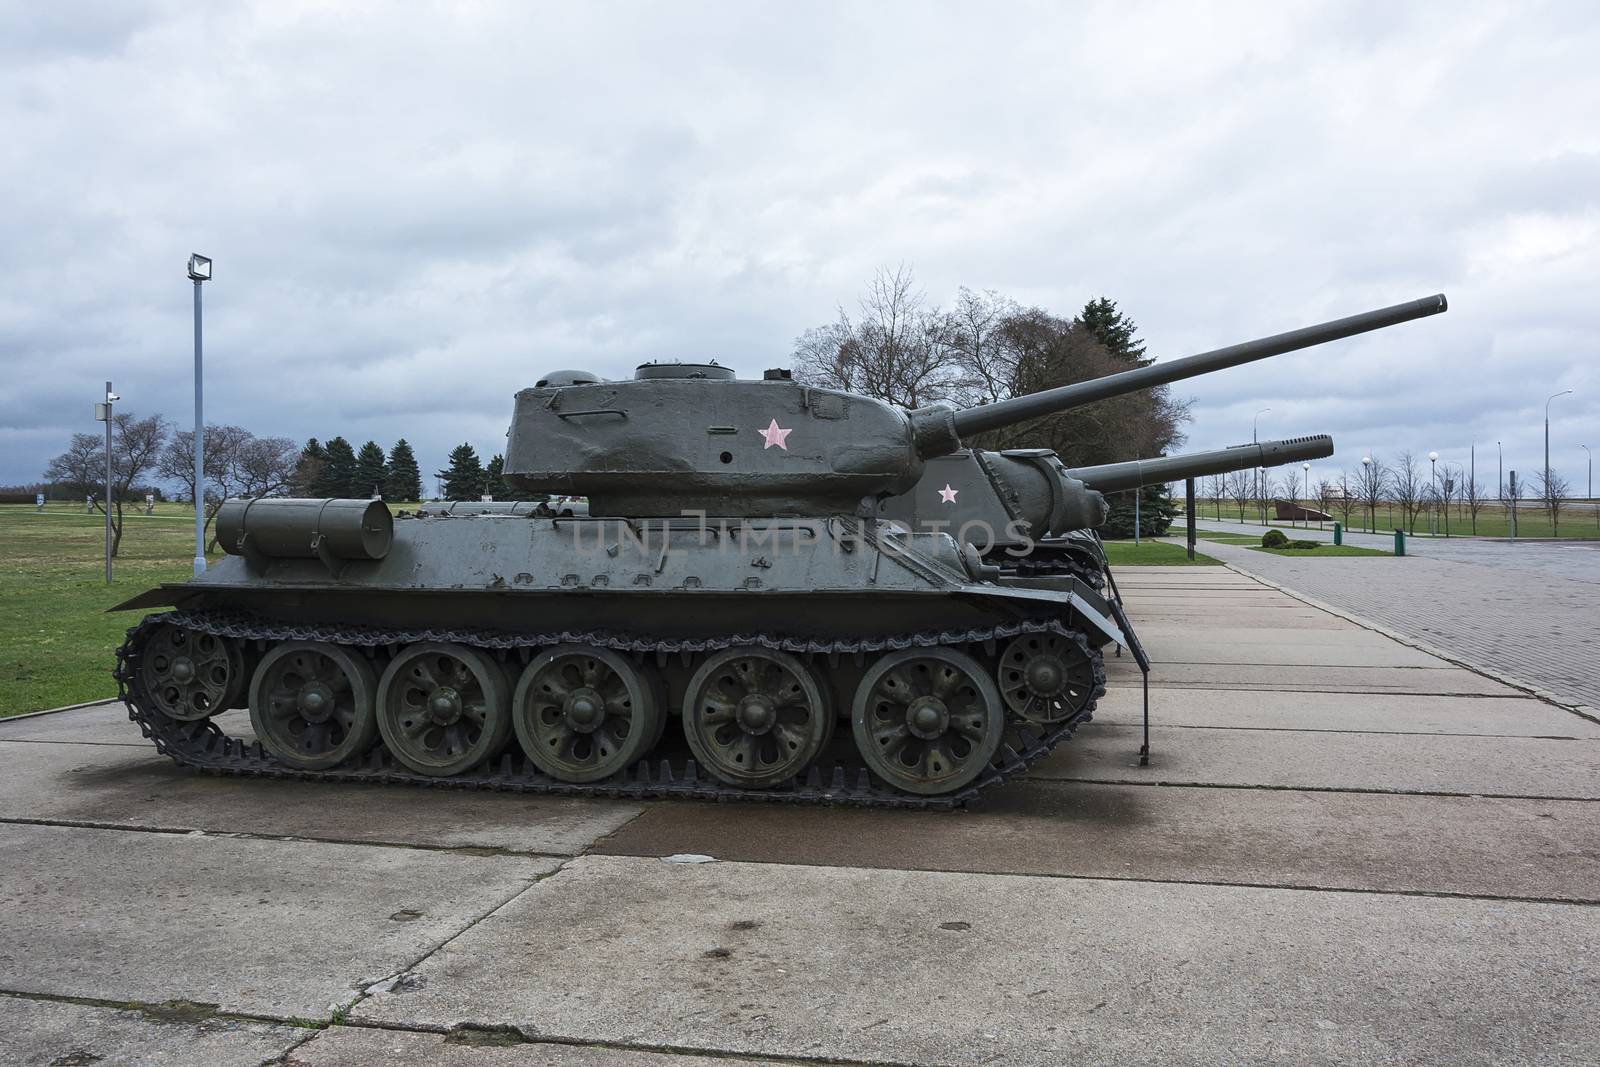 Belarus, Minsk - April 19, 2018: Soviet medium tank T-34 of the great Patriotic war, an exhibit of the memorial complex mound of glory.